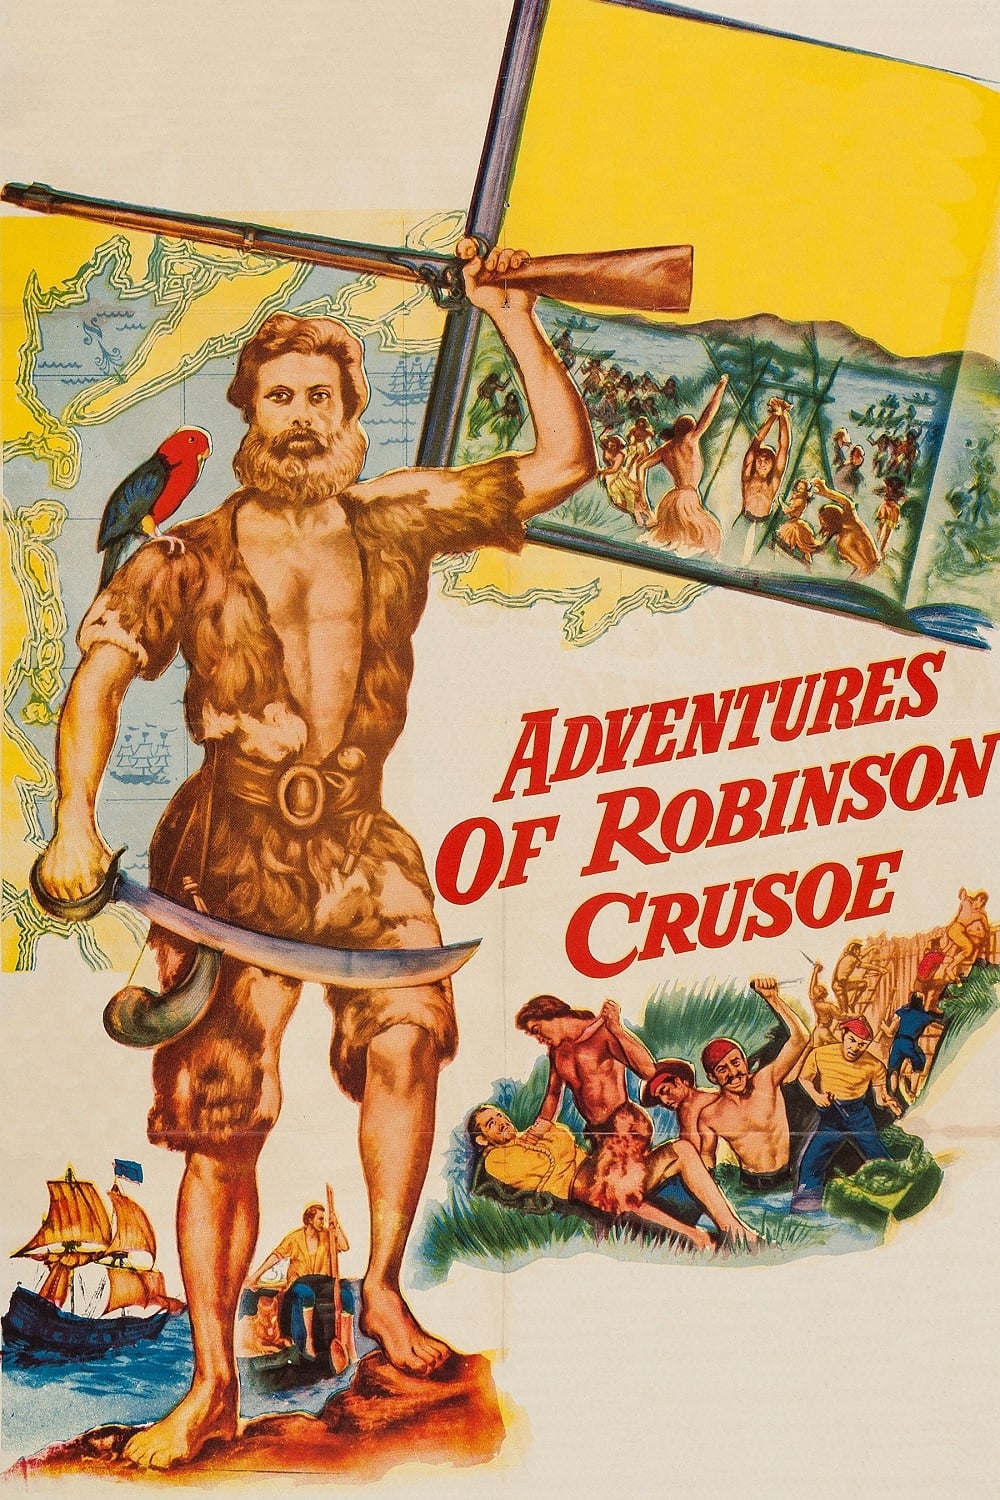 Robinson Crusoe (1954)